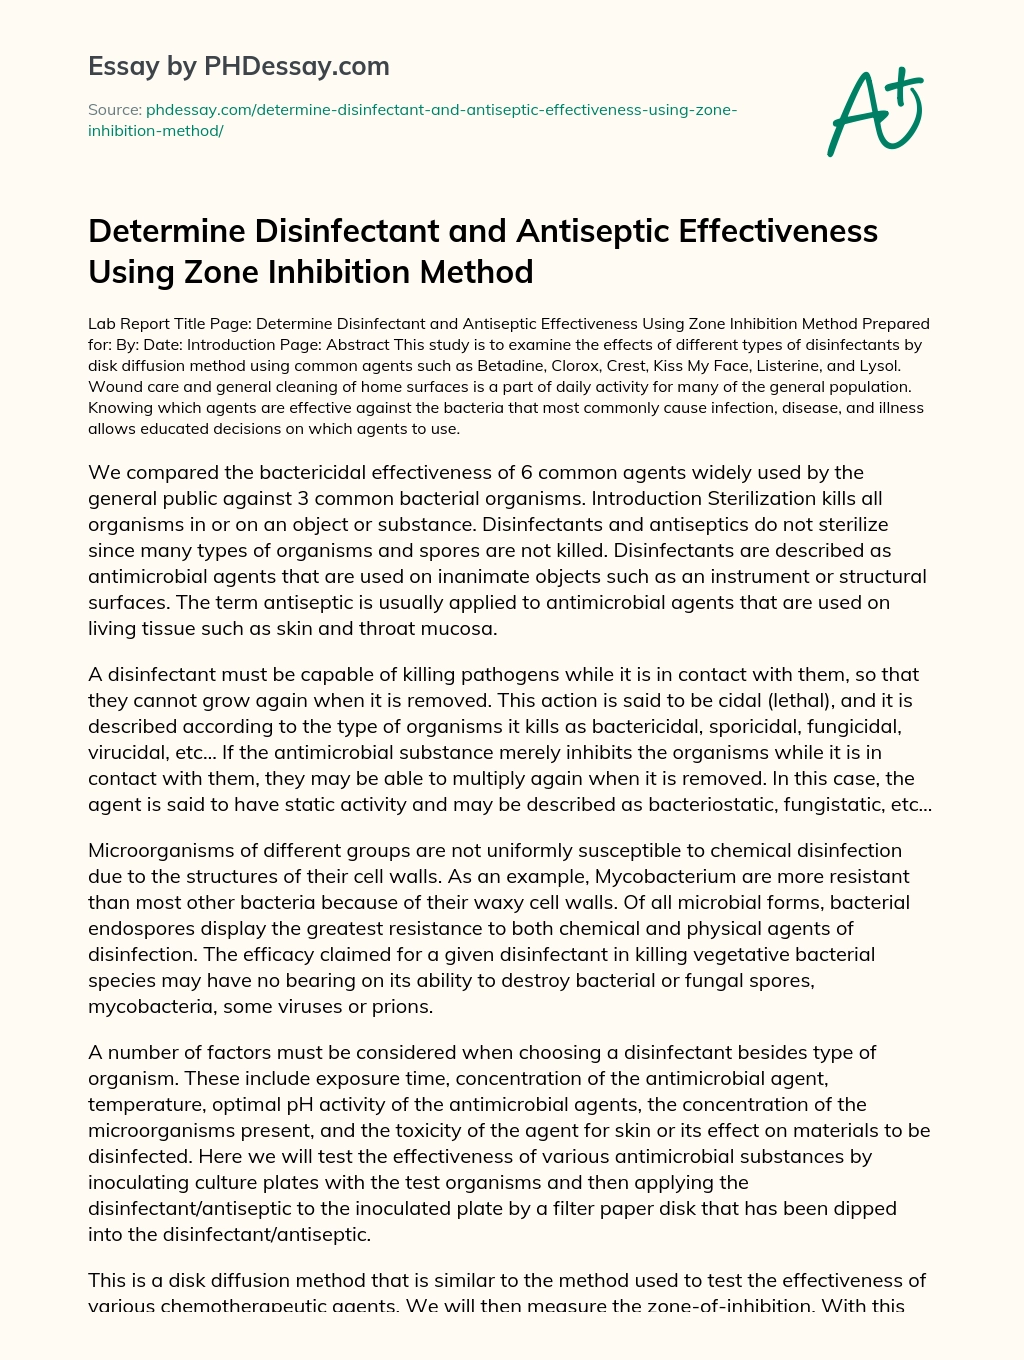 Determine Disinfectant and Antiseptic Effectiveness Using Zone Inhibition Method essay